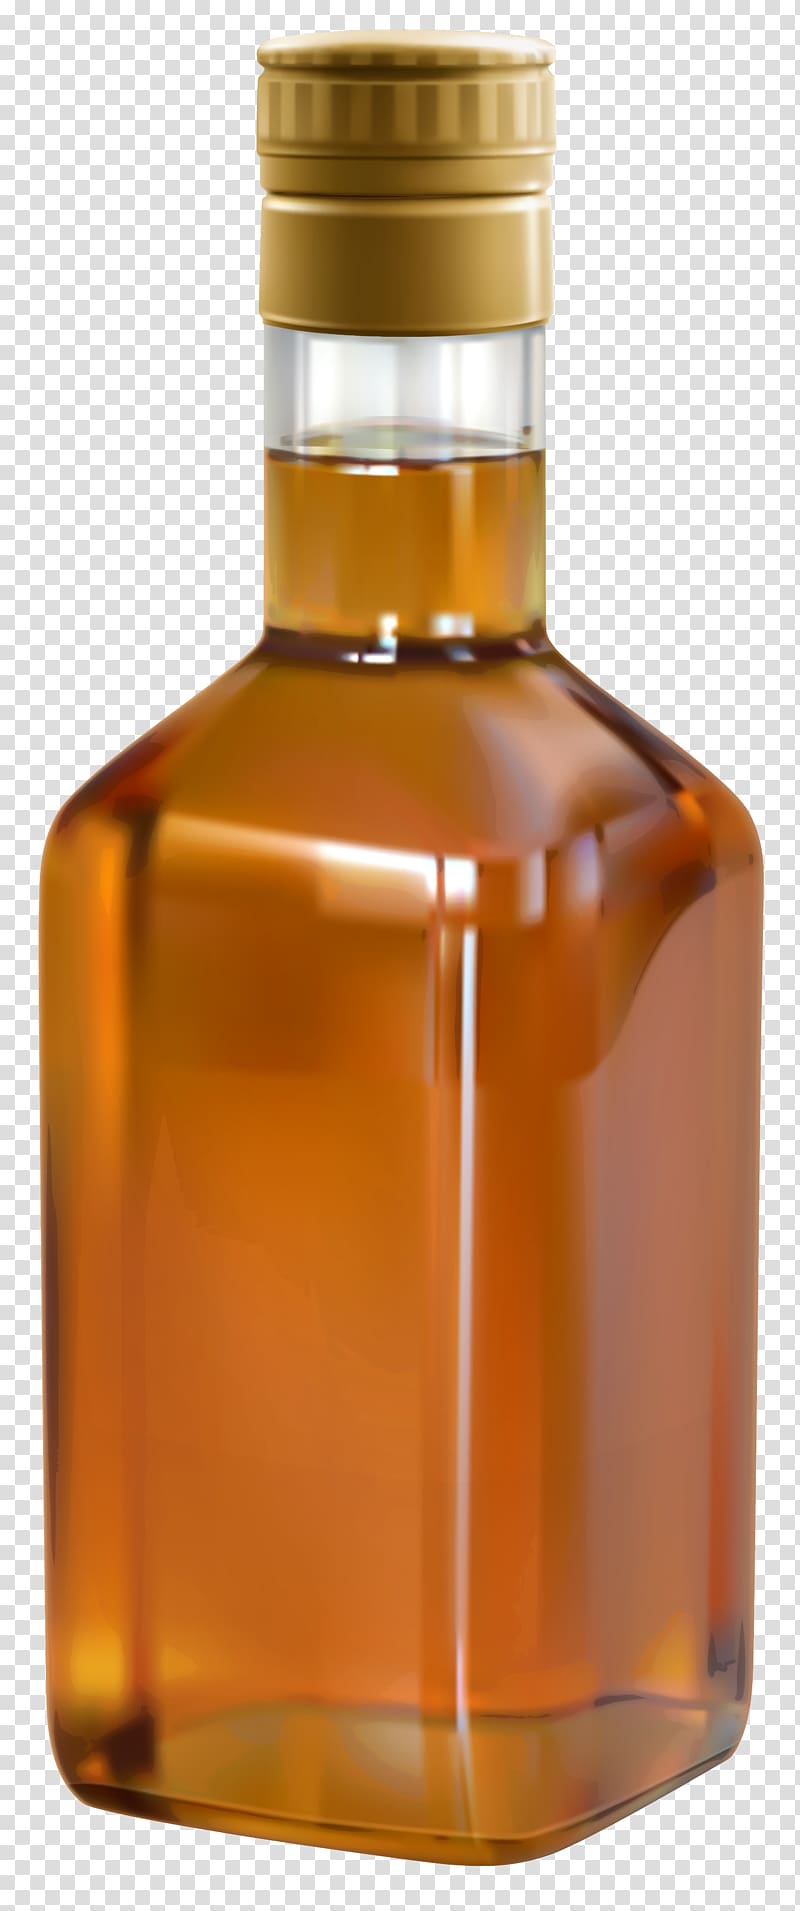 Bourbon whiskey Scotch whisky Single malt whisky Distilled beverage, bottle transparent background PNG clipart